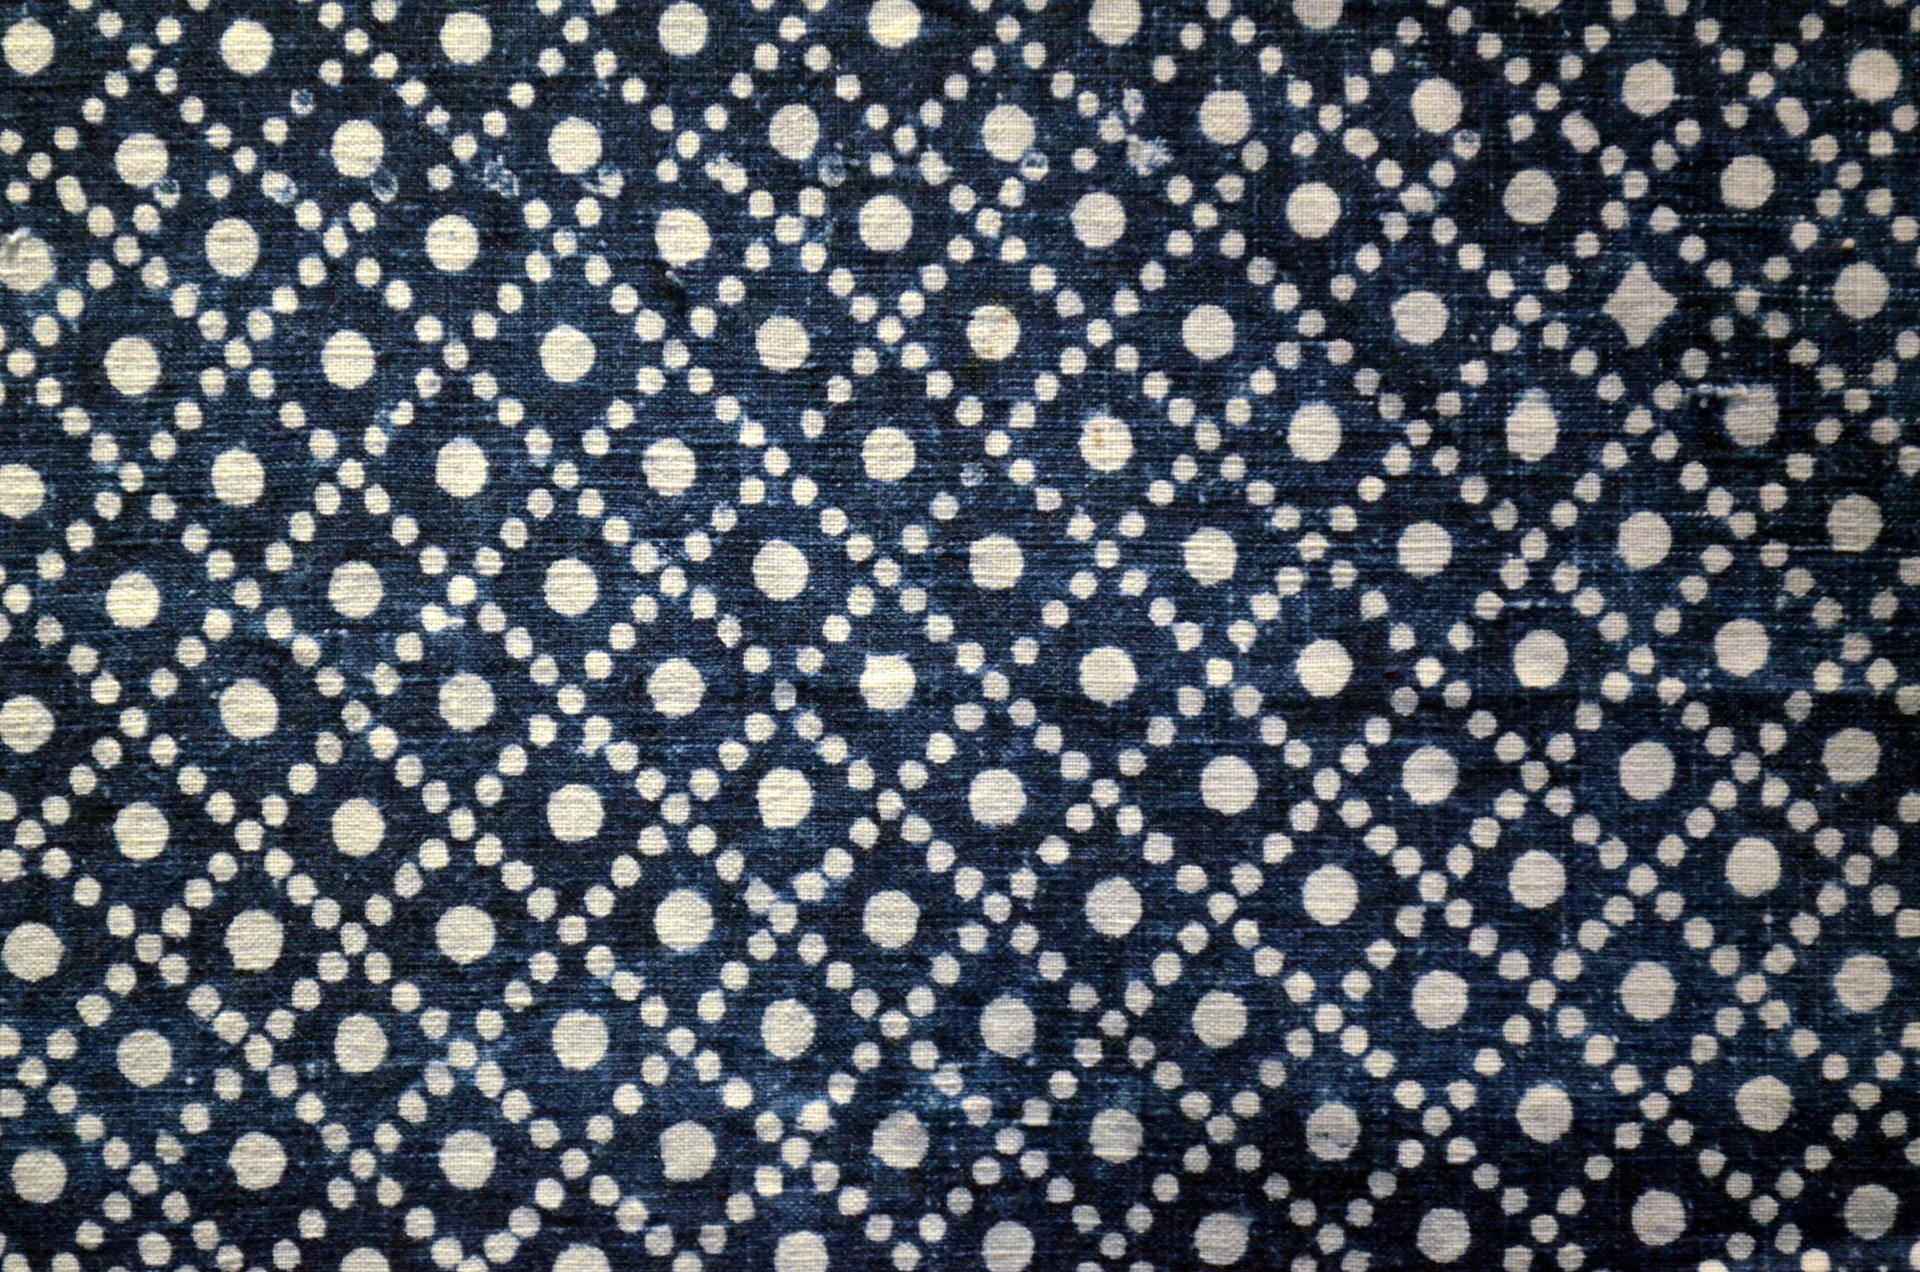 Nantong Blue Calico cloth pattern